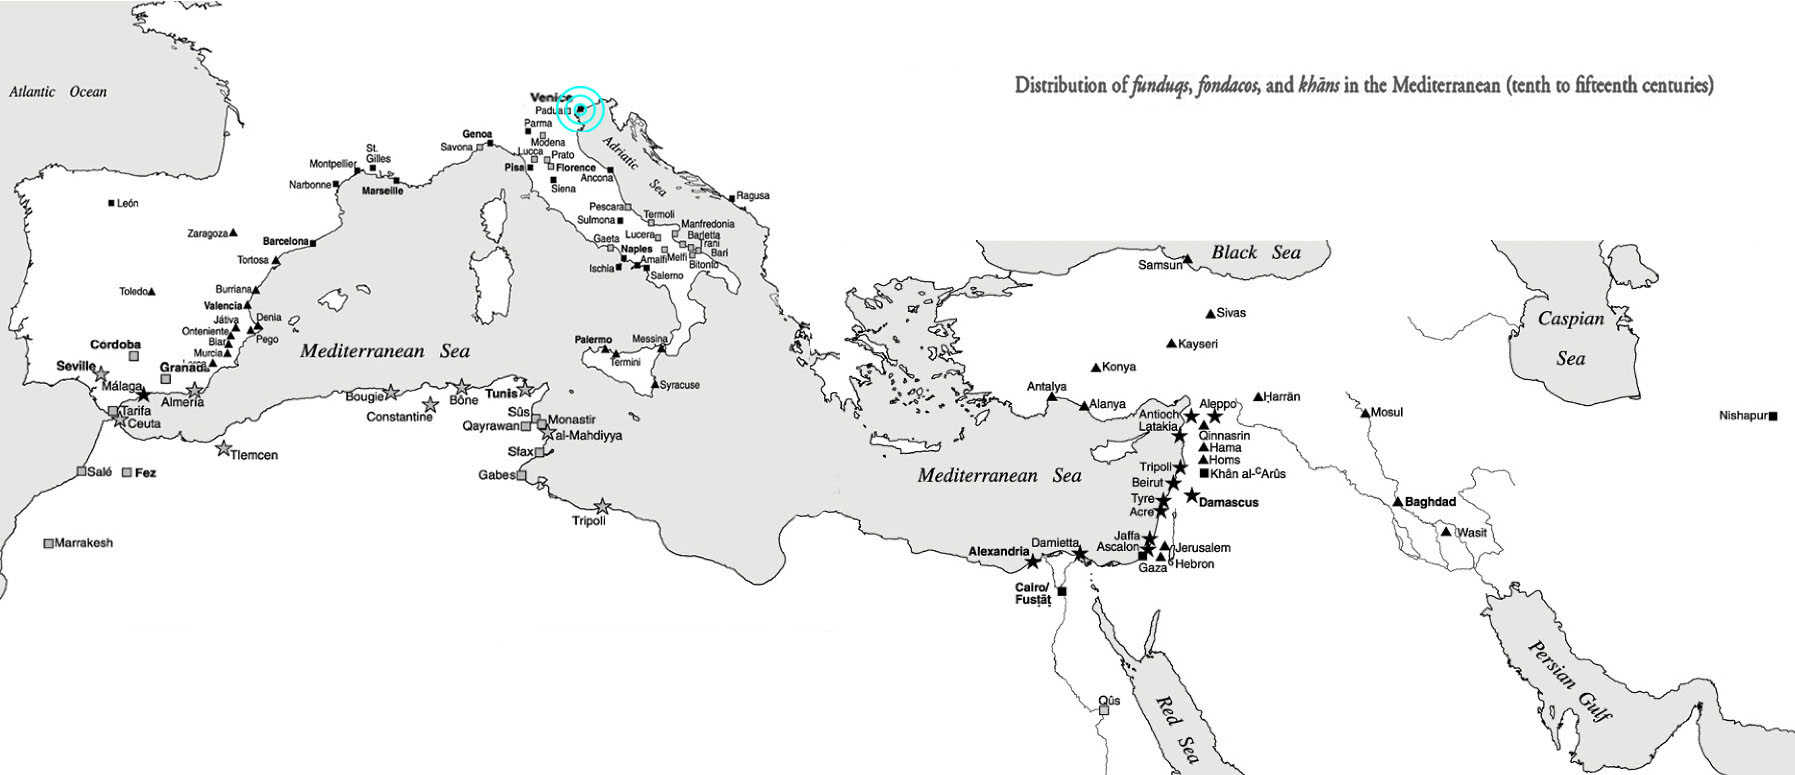 Mappa fondaci mediterraneo dal X al XV sec Version dida piccola.jpg